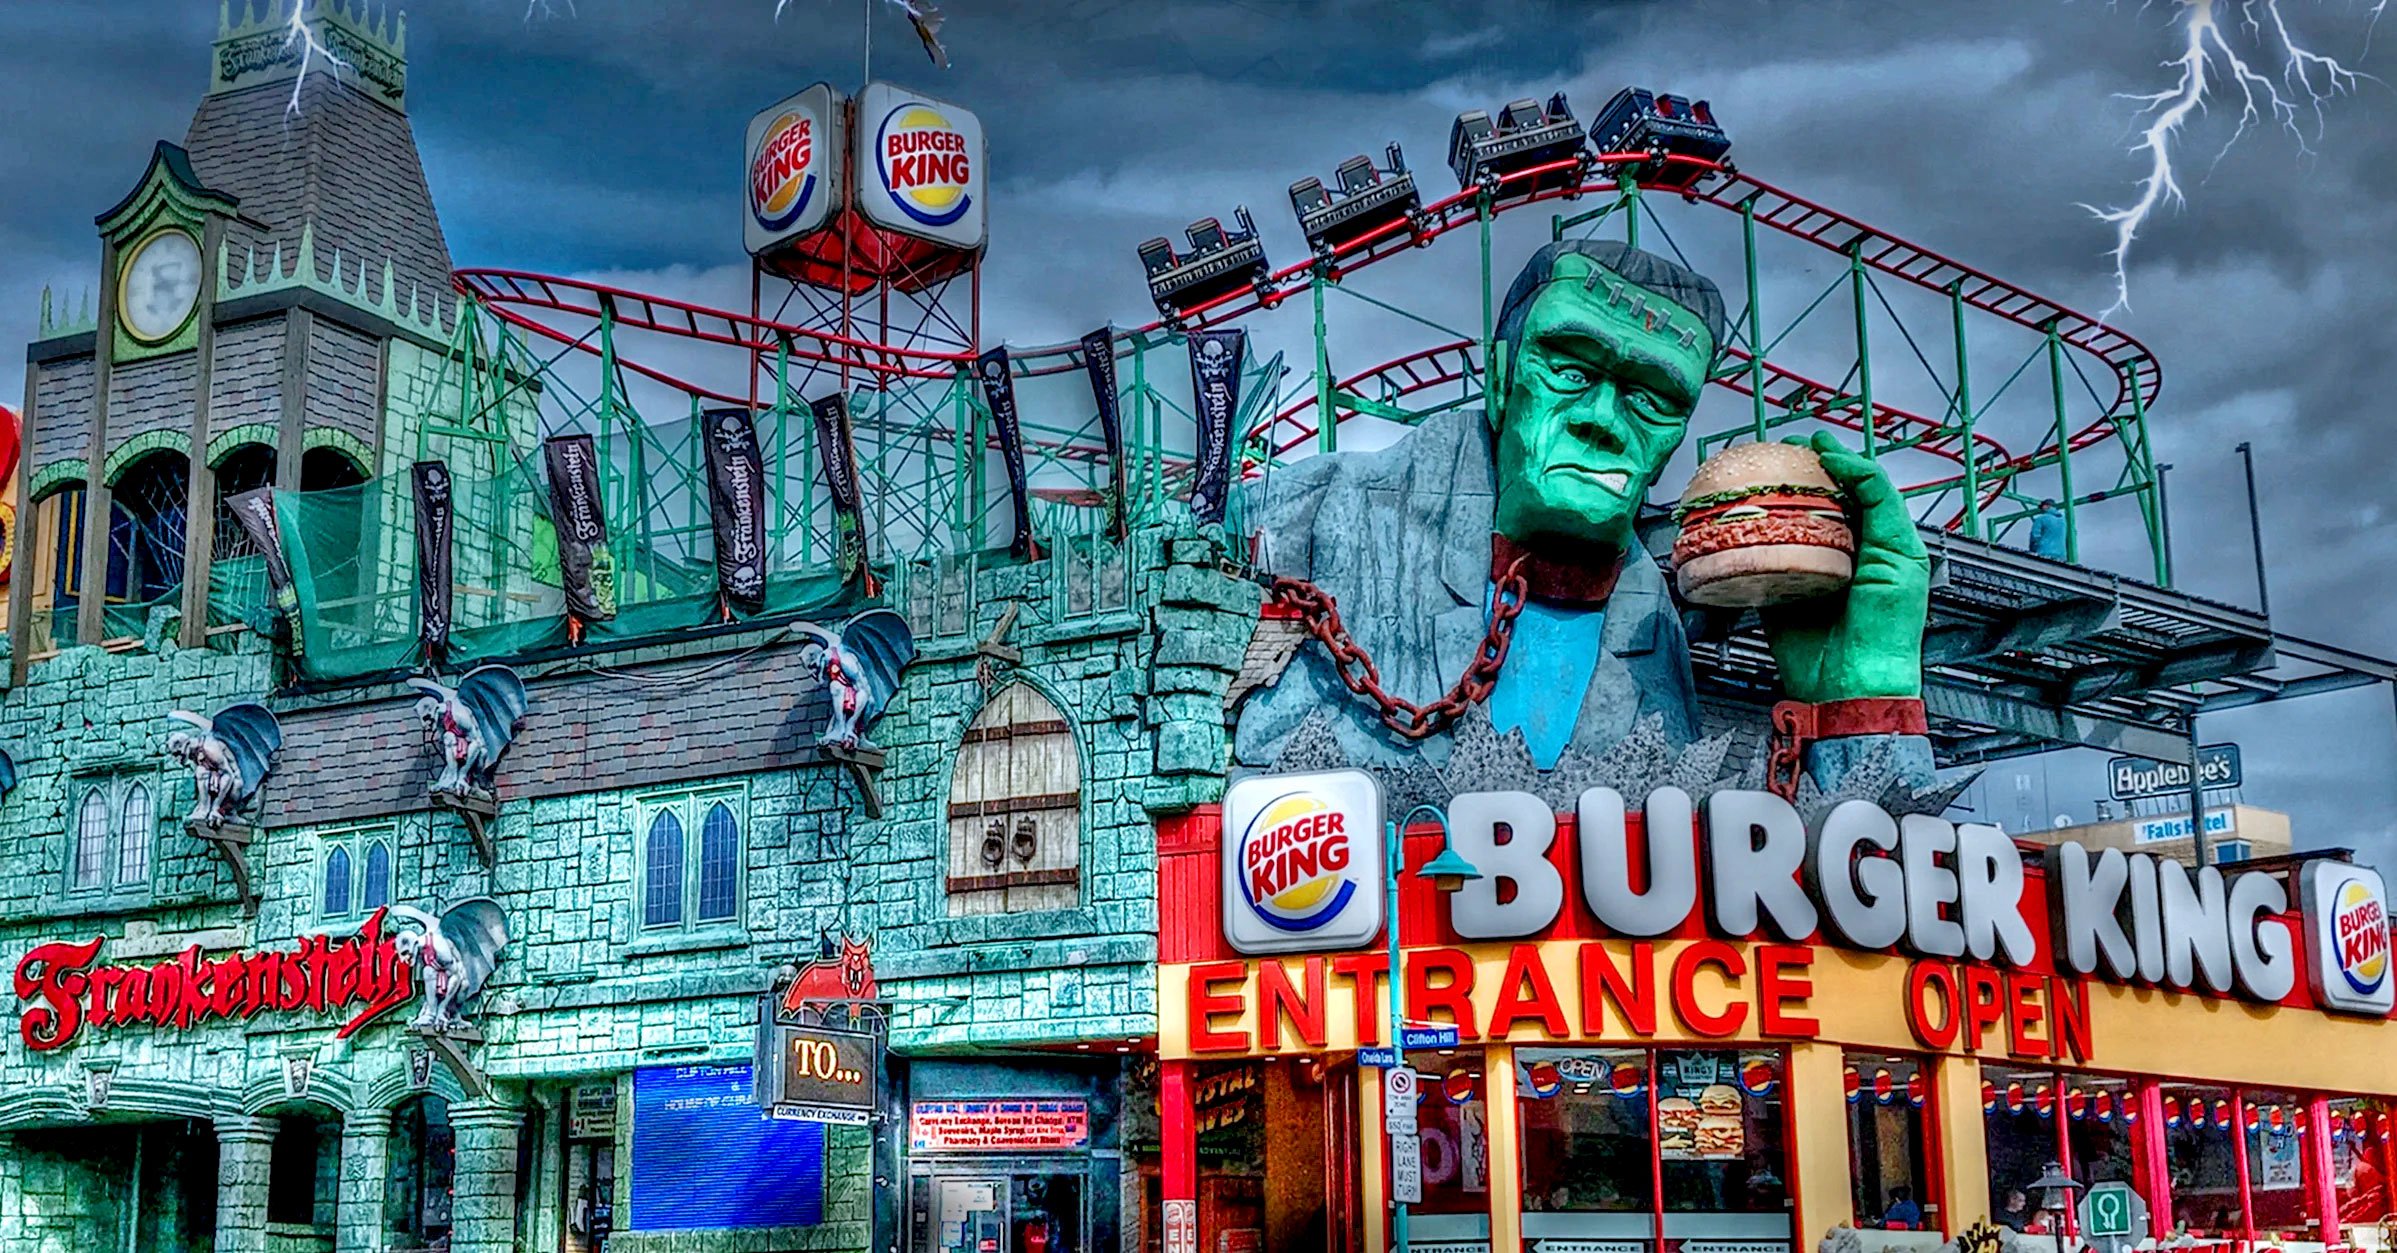 Niagara Falls' Top Haunted Attractions